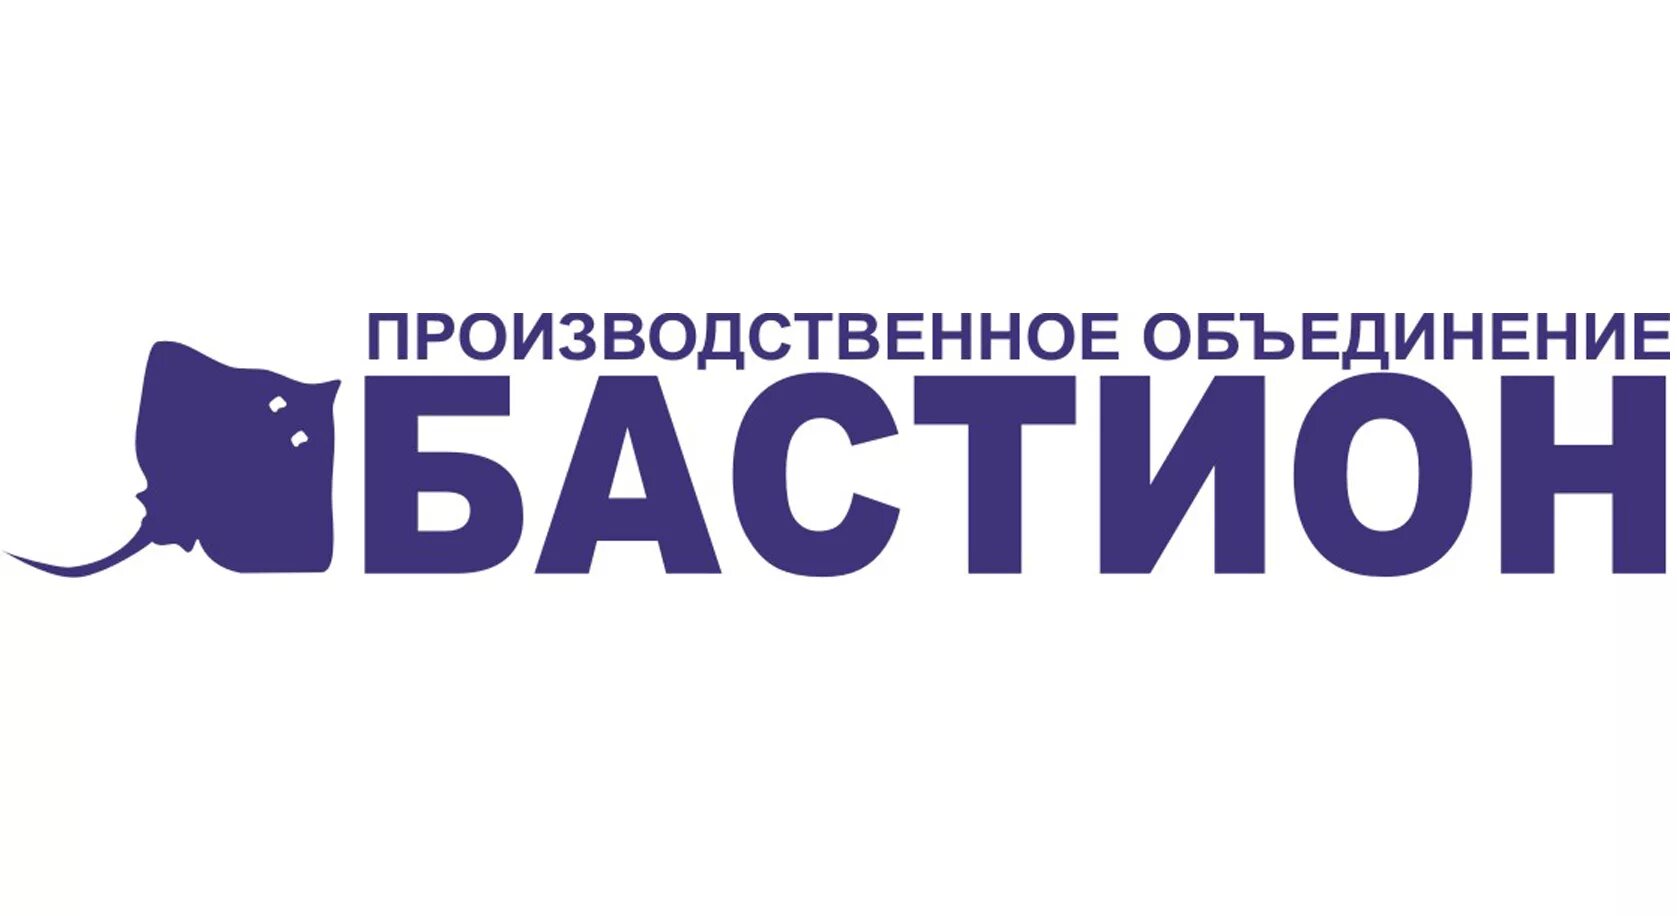 Бастион логотип. ЗАО Бастион. Производственного объединения "Бастион". Бастион производственное объединение логотип.